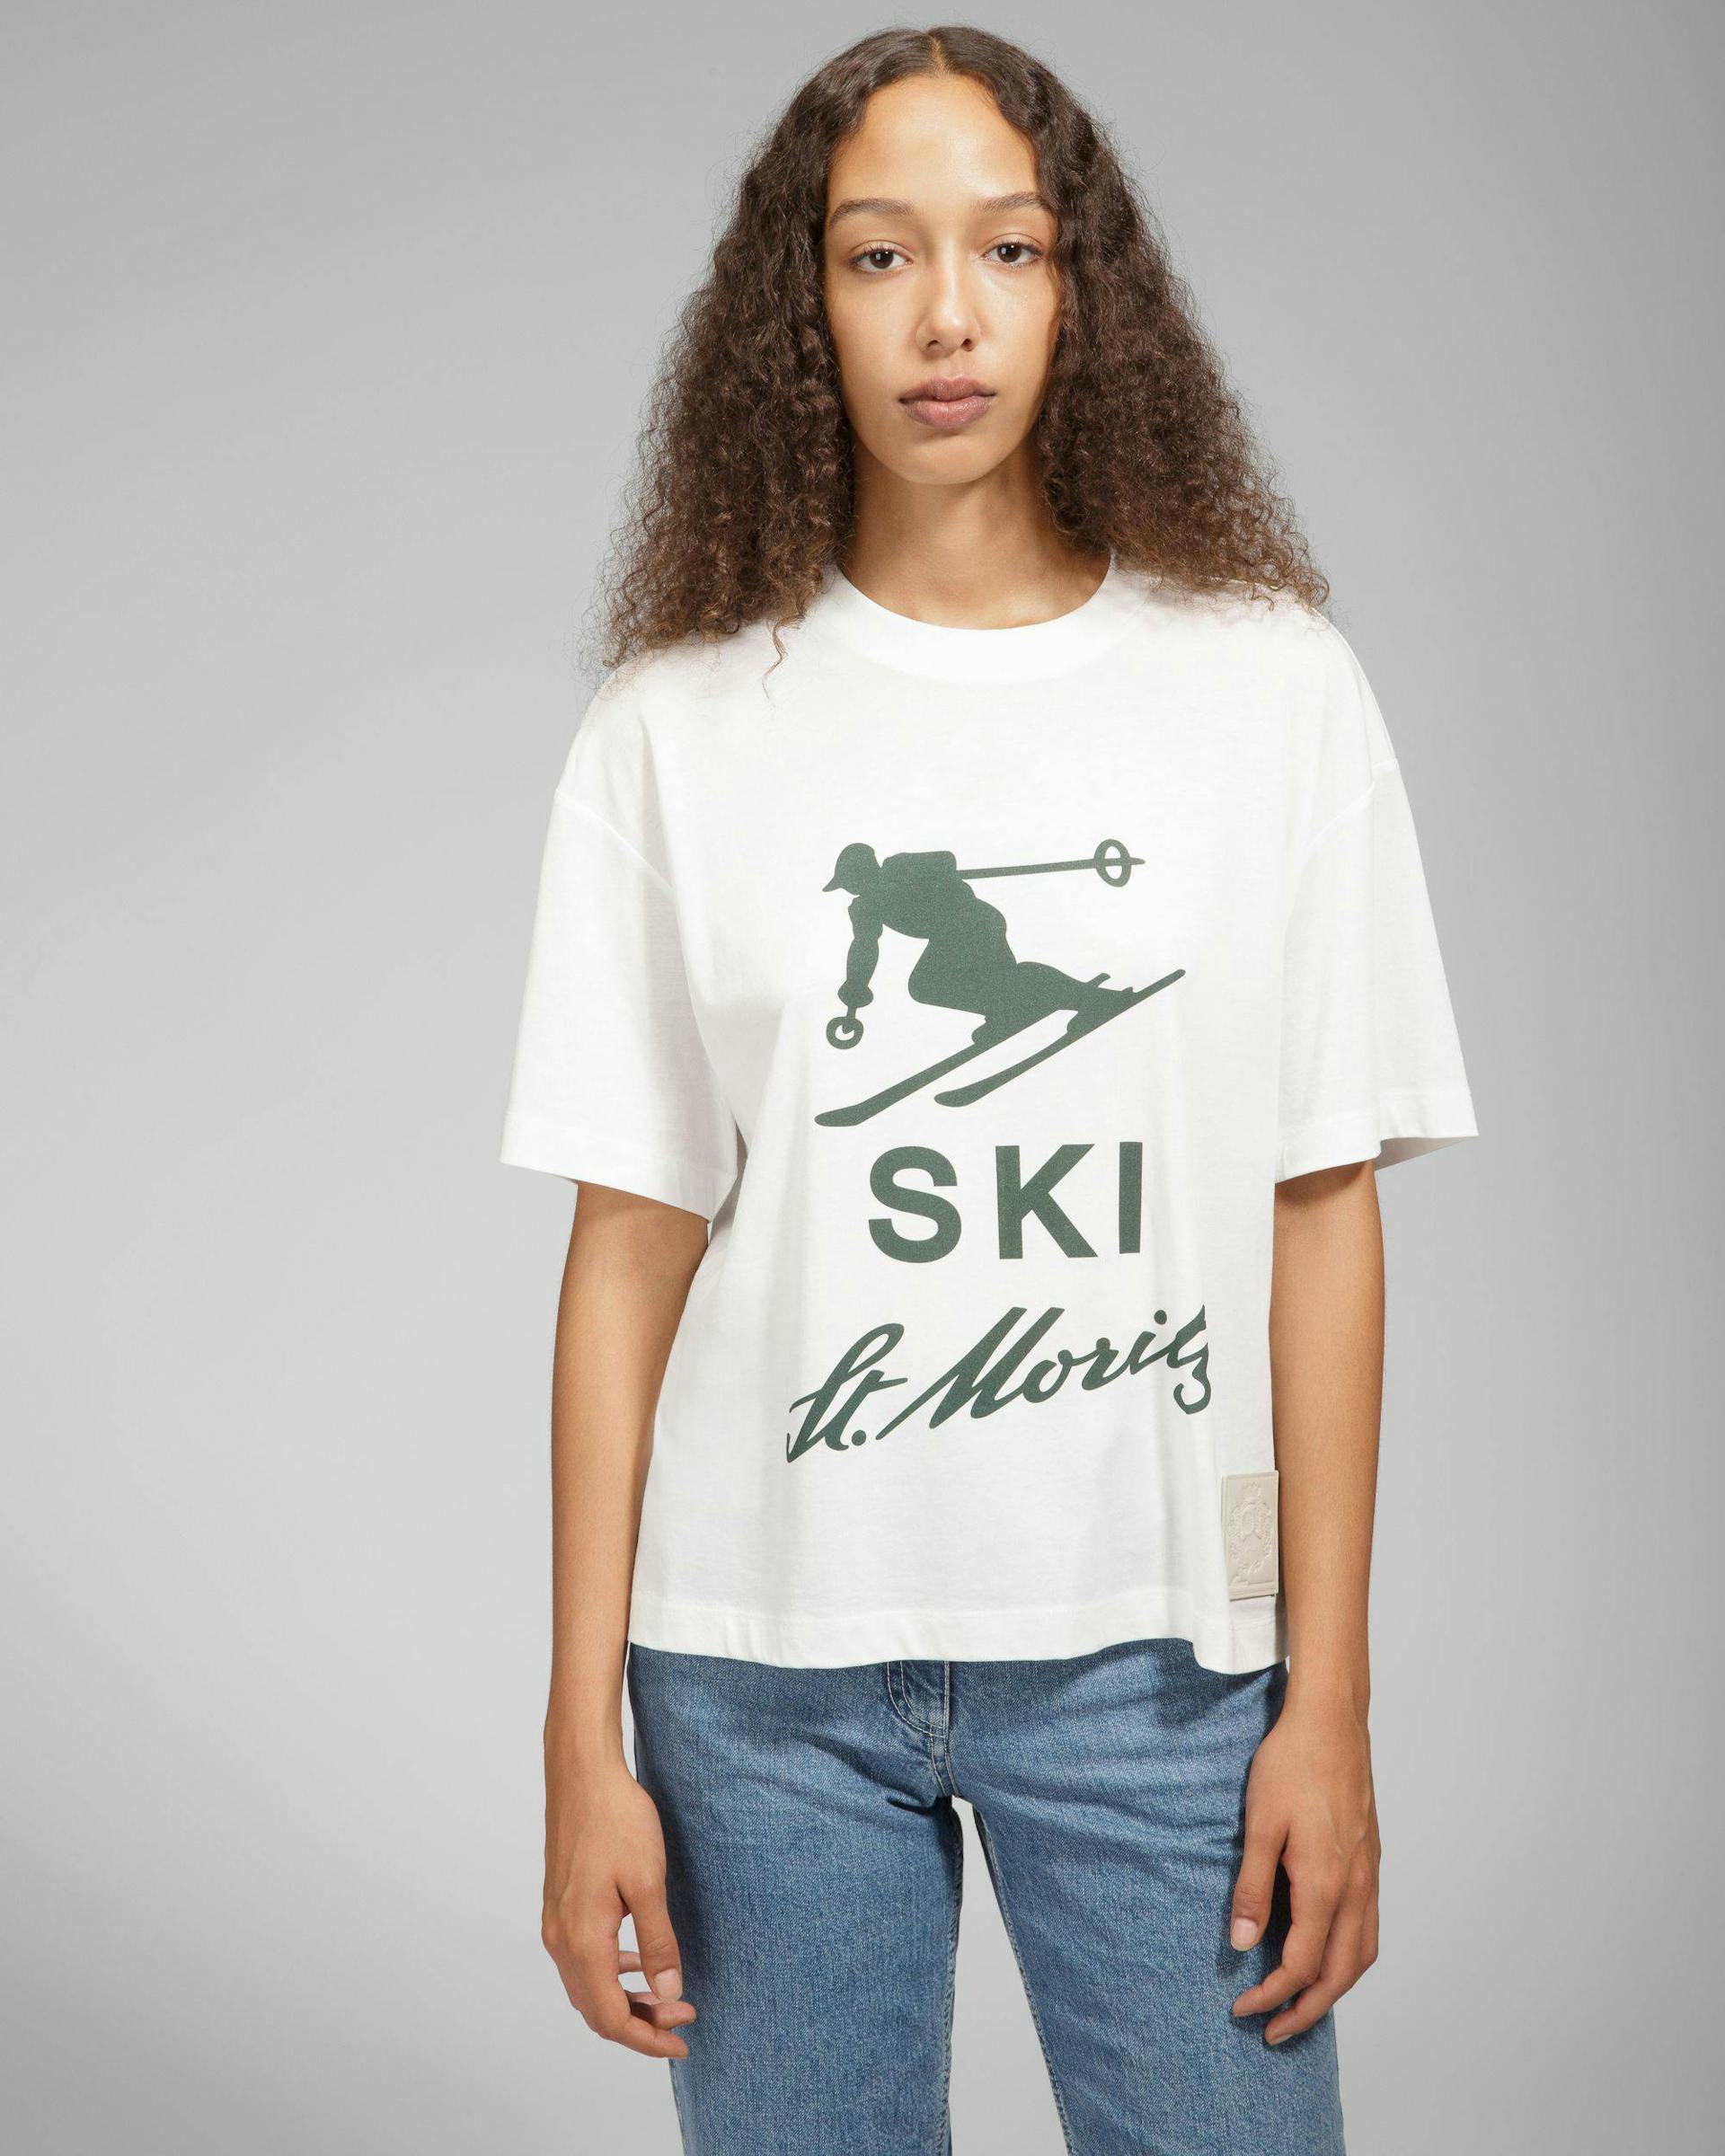 T-Shirt Ski St Moritz - Bally